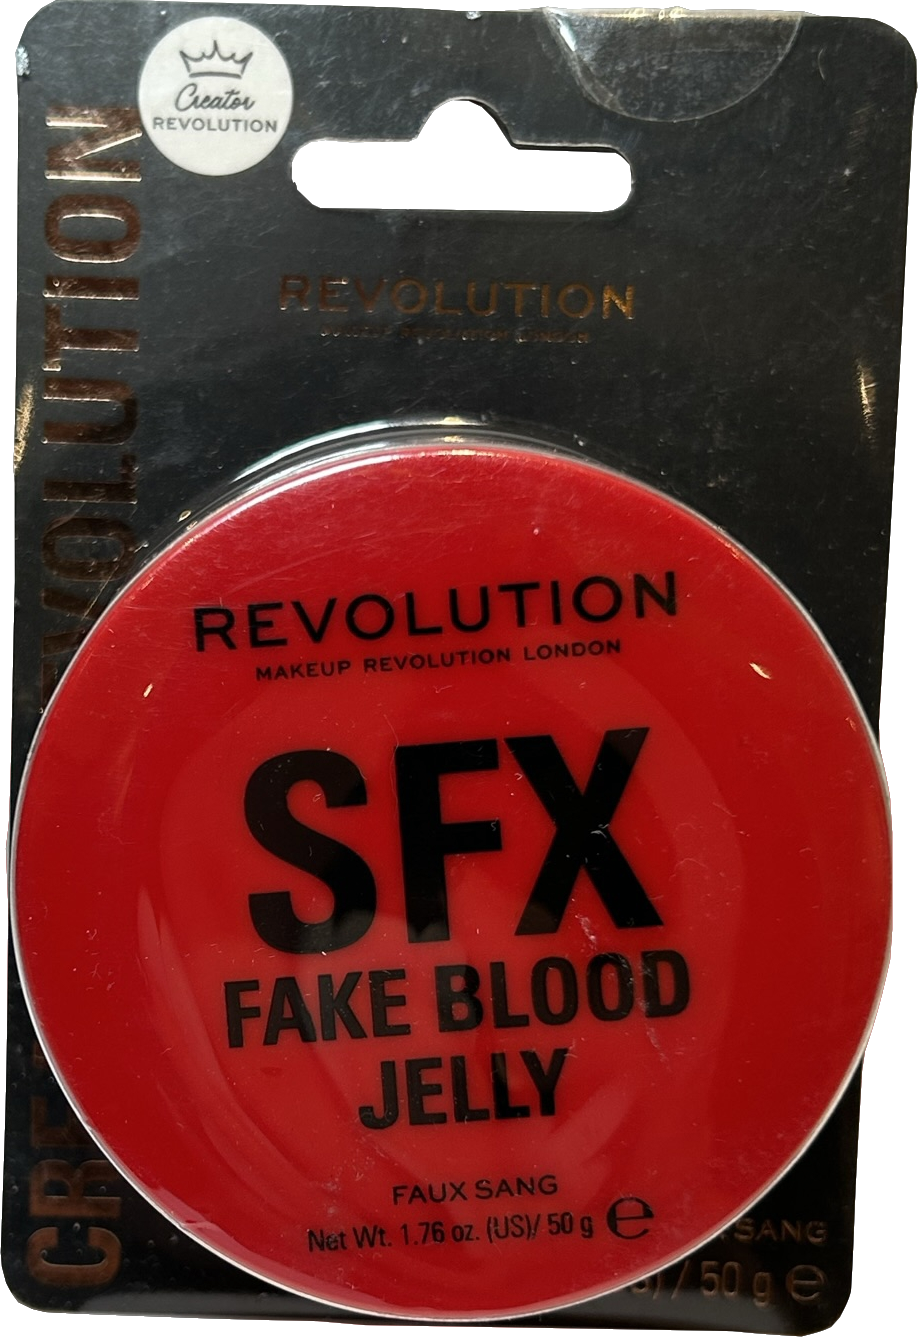 Creator Revolution Sfx Fake Blood Jelly 50g